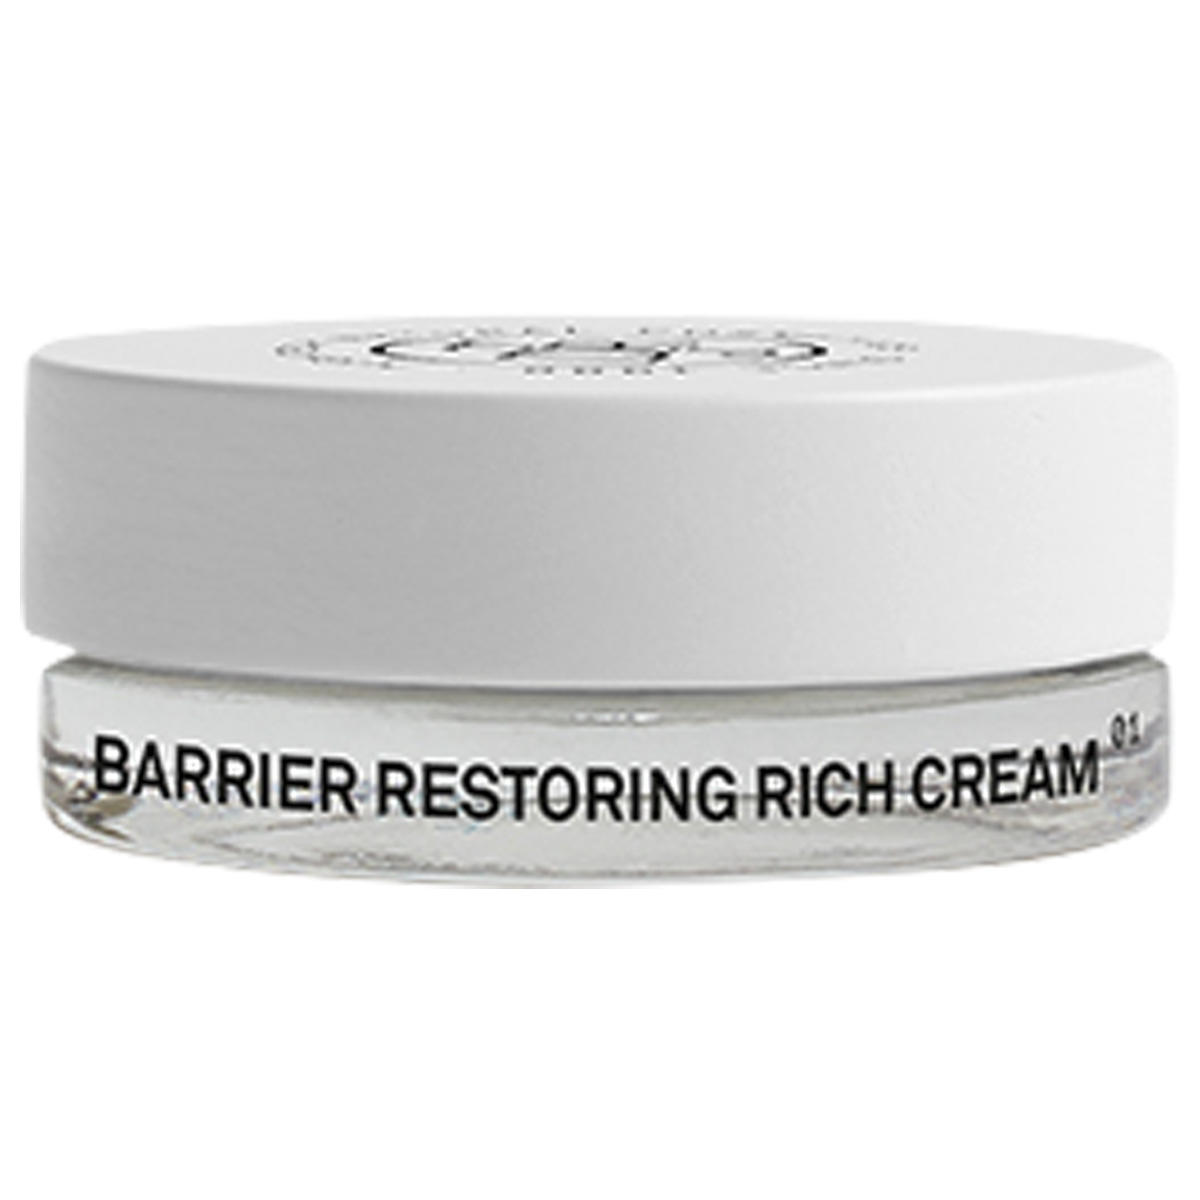 TEAM DR JOSEPH Barrier Restoring Rich Cream 5 ml - 1